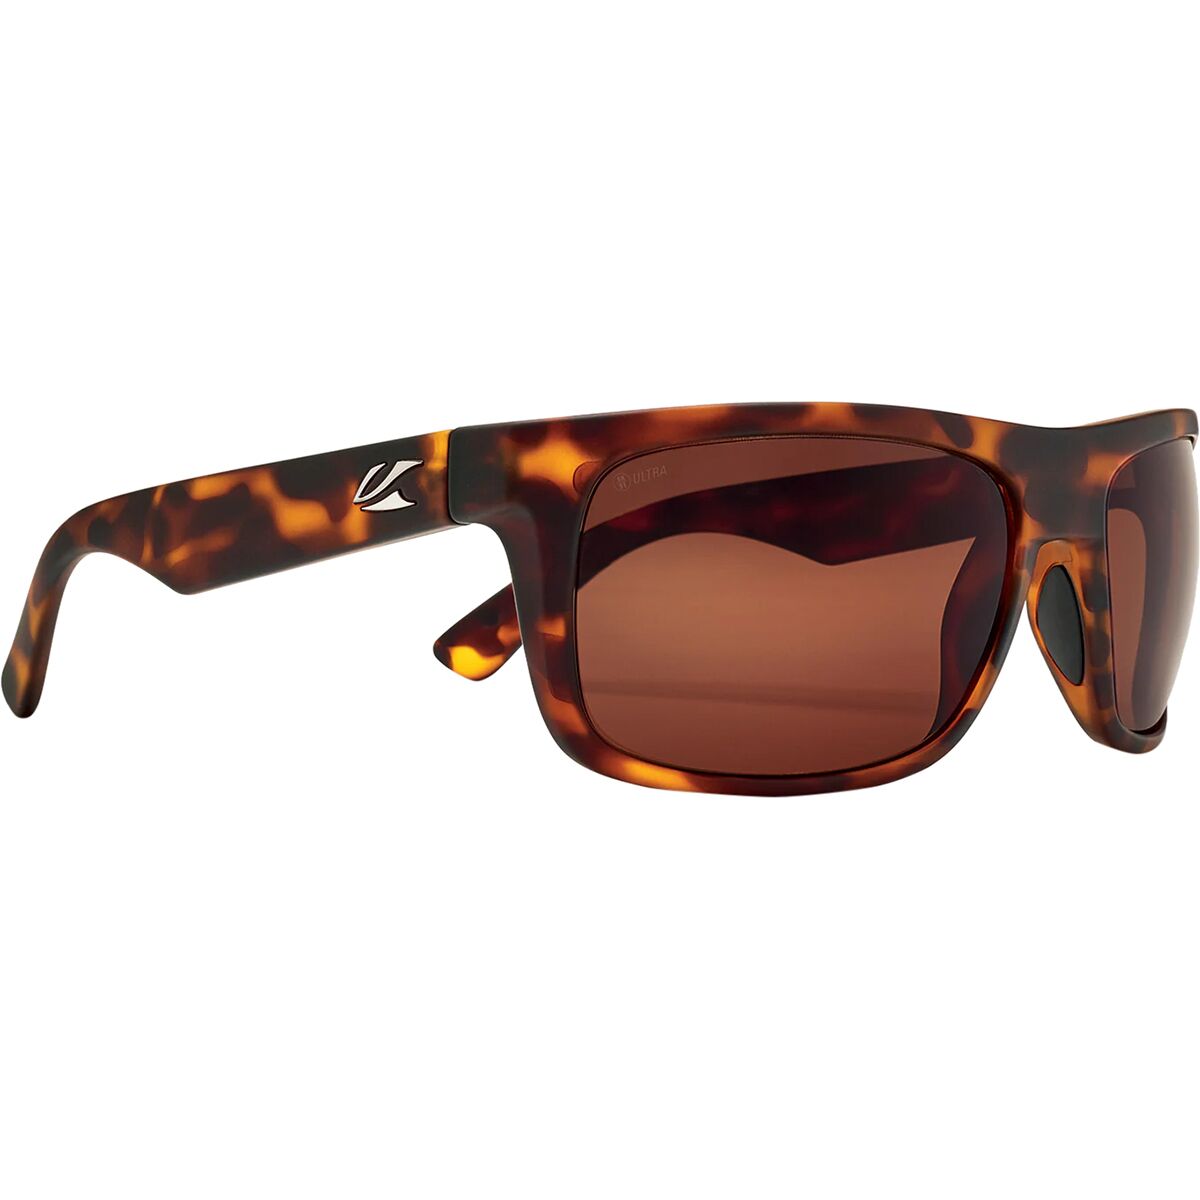 Kaenon Burnet Mid Ultra Polarized Sunglasses Matte Tortoise/Ultra Brown 12, One Size - Men's